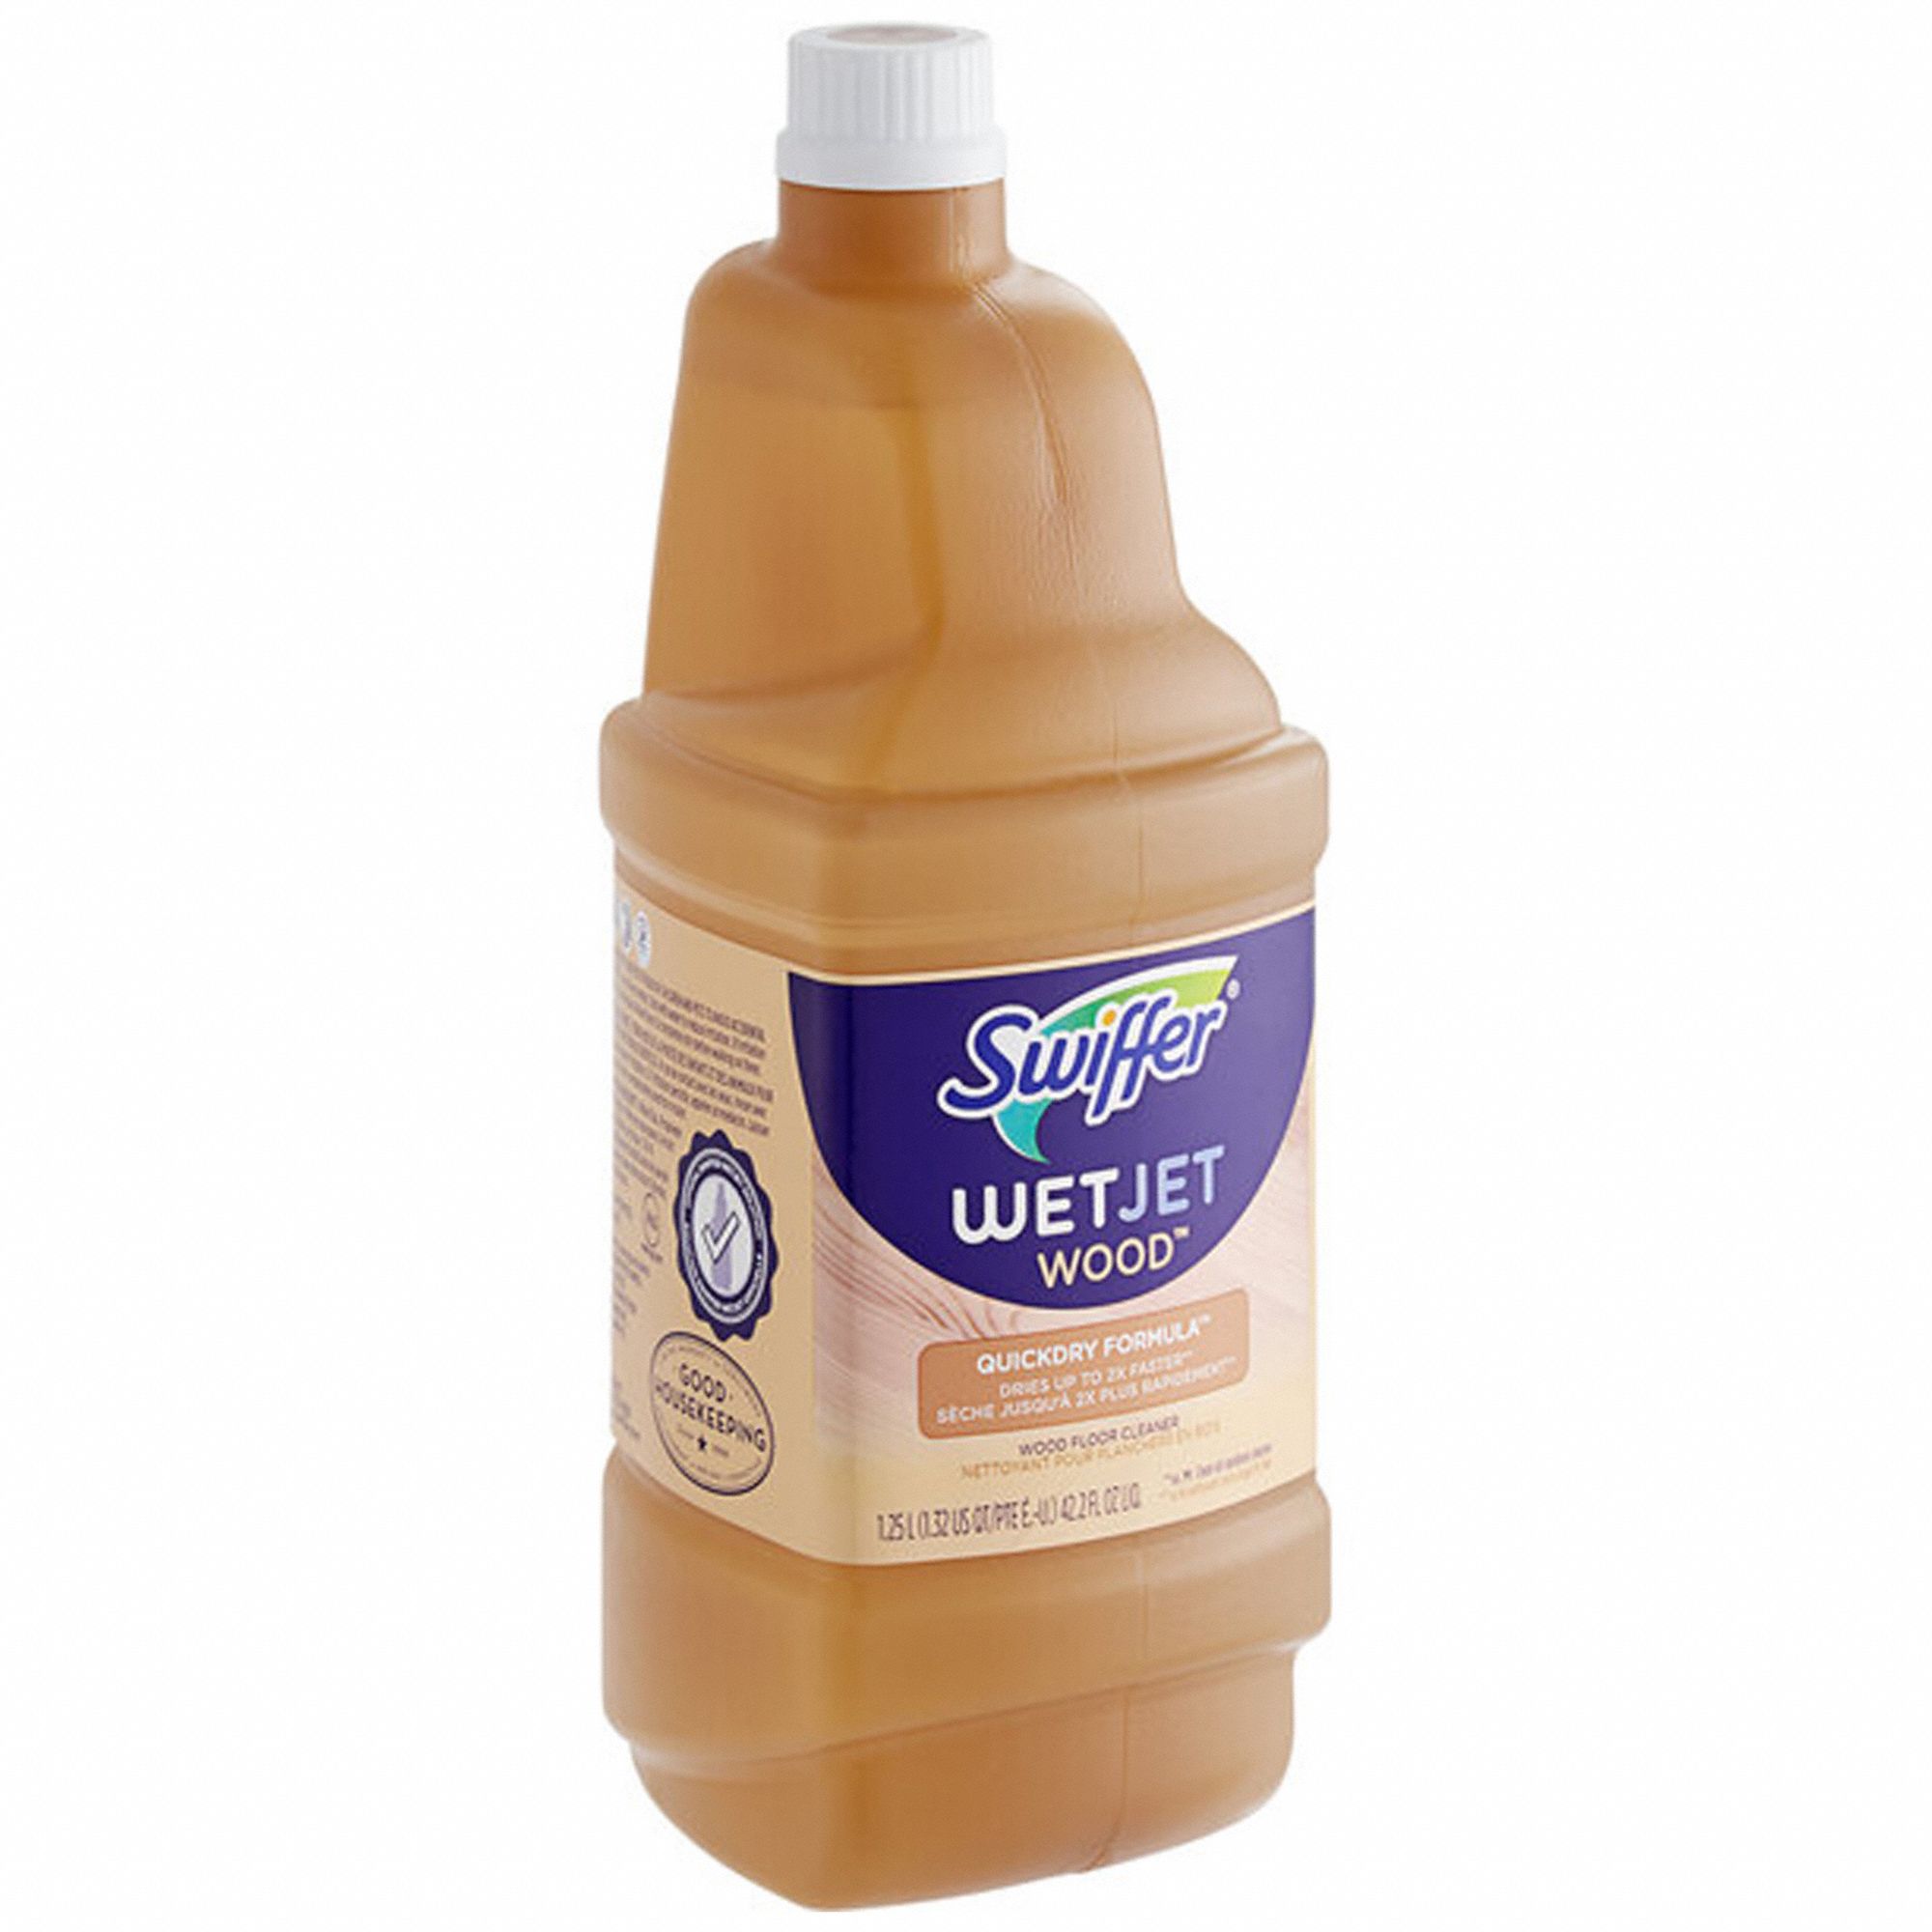 Swiffer WetJet Solution Nettoyante Pour Balai Spray, ( 2 x 1,25 L